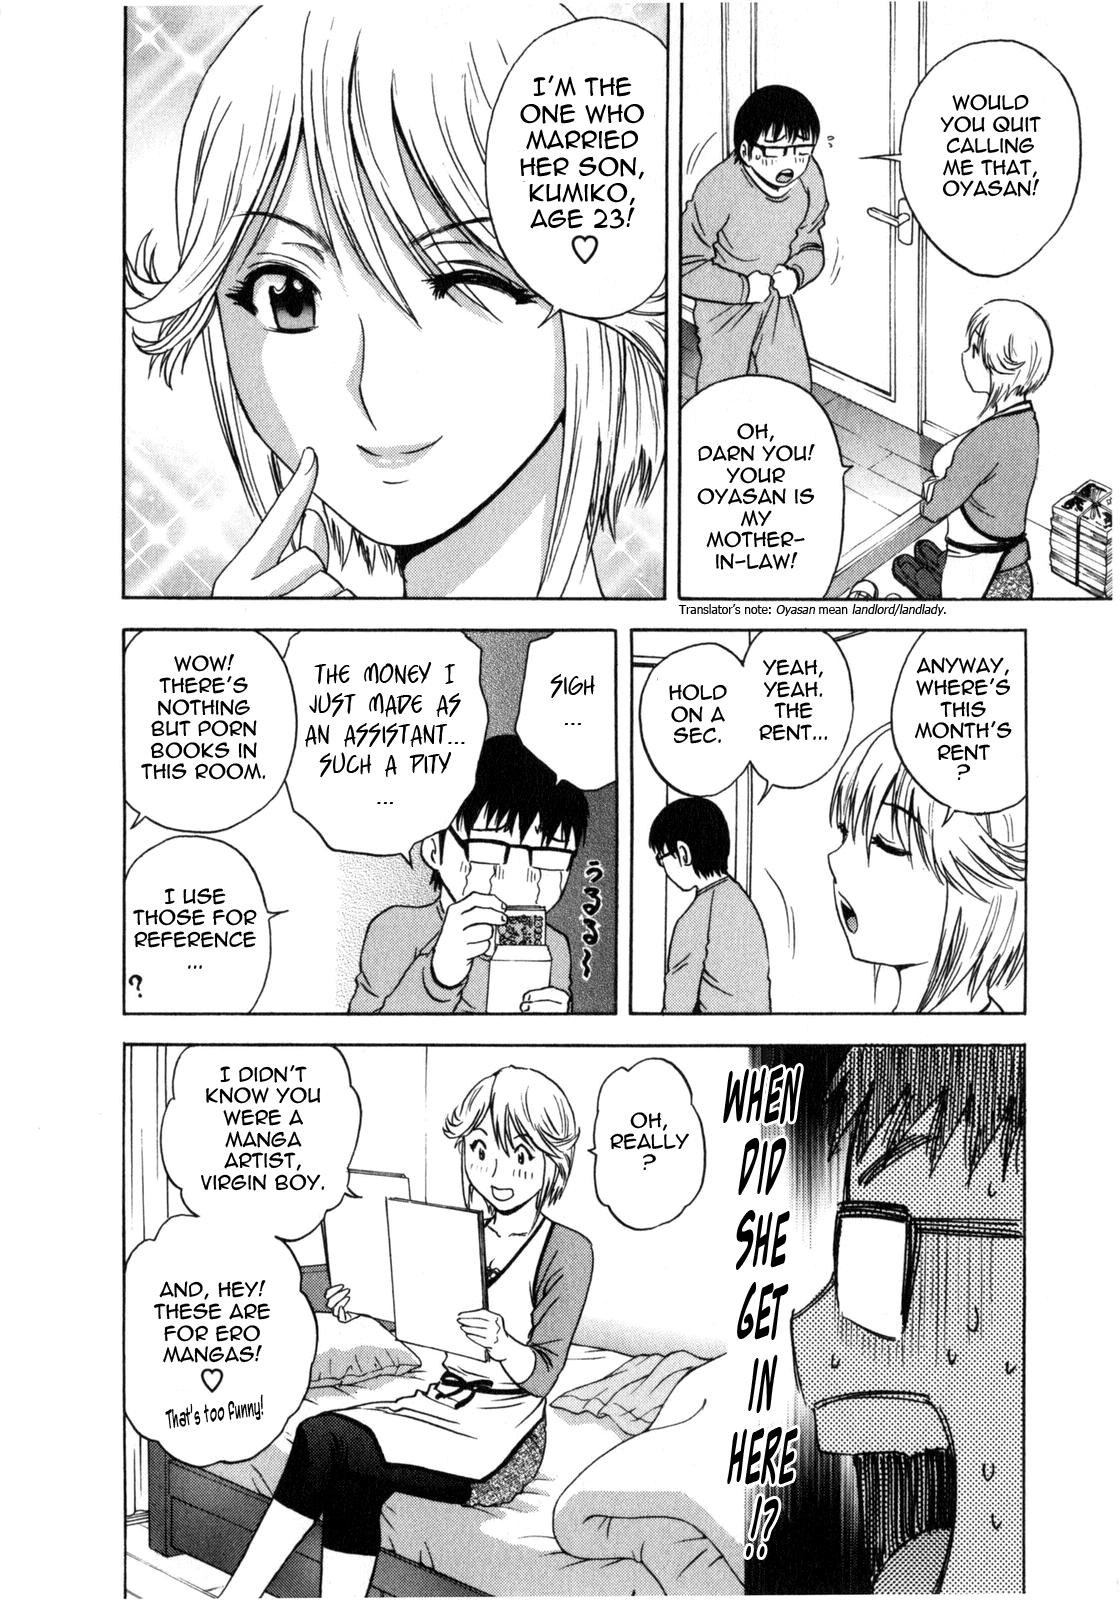 [Hidemaru] Life with Married Women Just Like a Manga 1 - Ch. 1-8 [English] {Tadanohito} 29